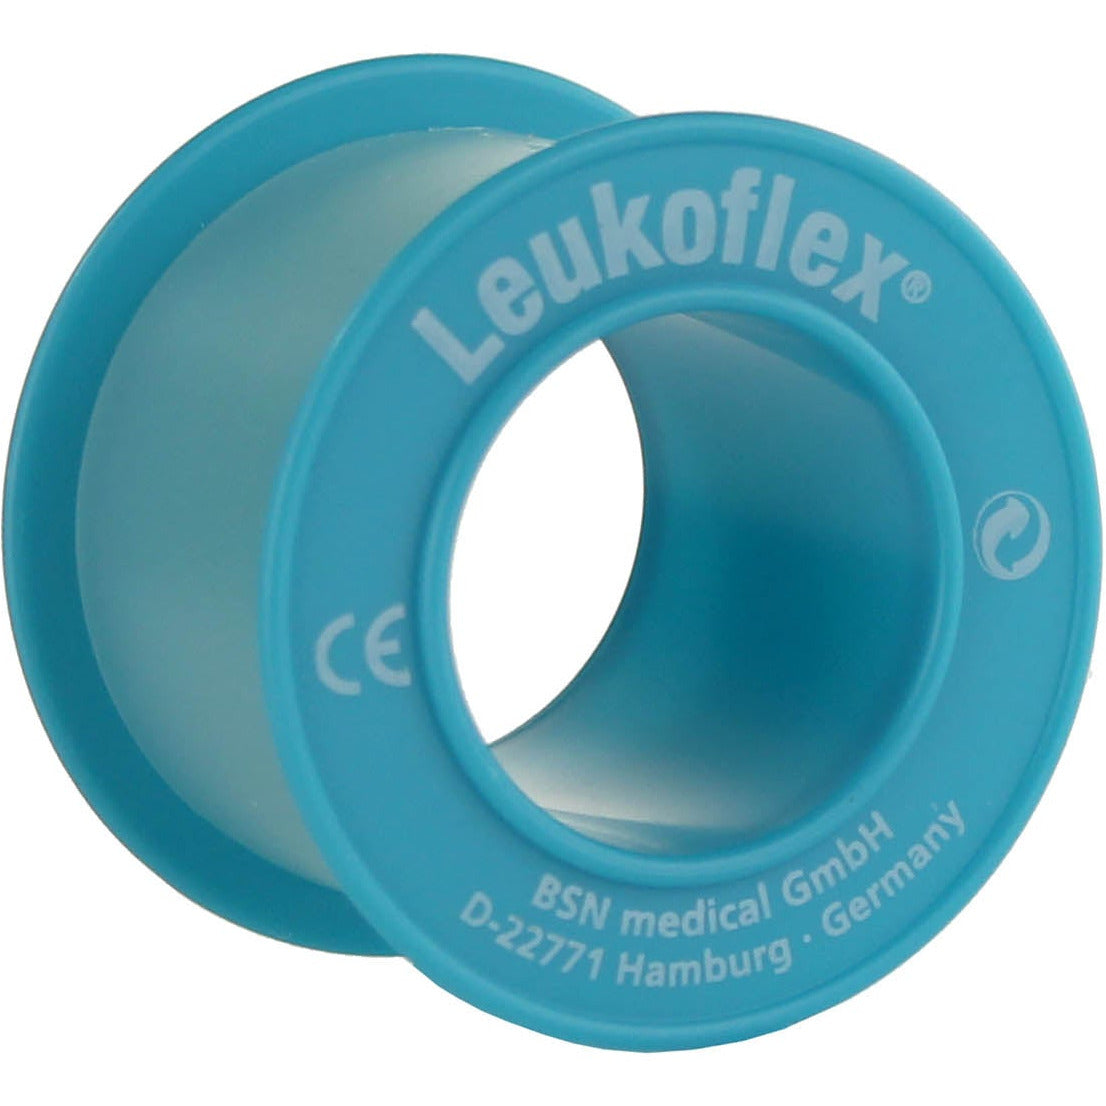 Leukoflex Tape 2.5cm x 5m Waterproof Adhesive Tape per Roll